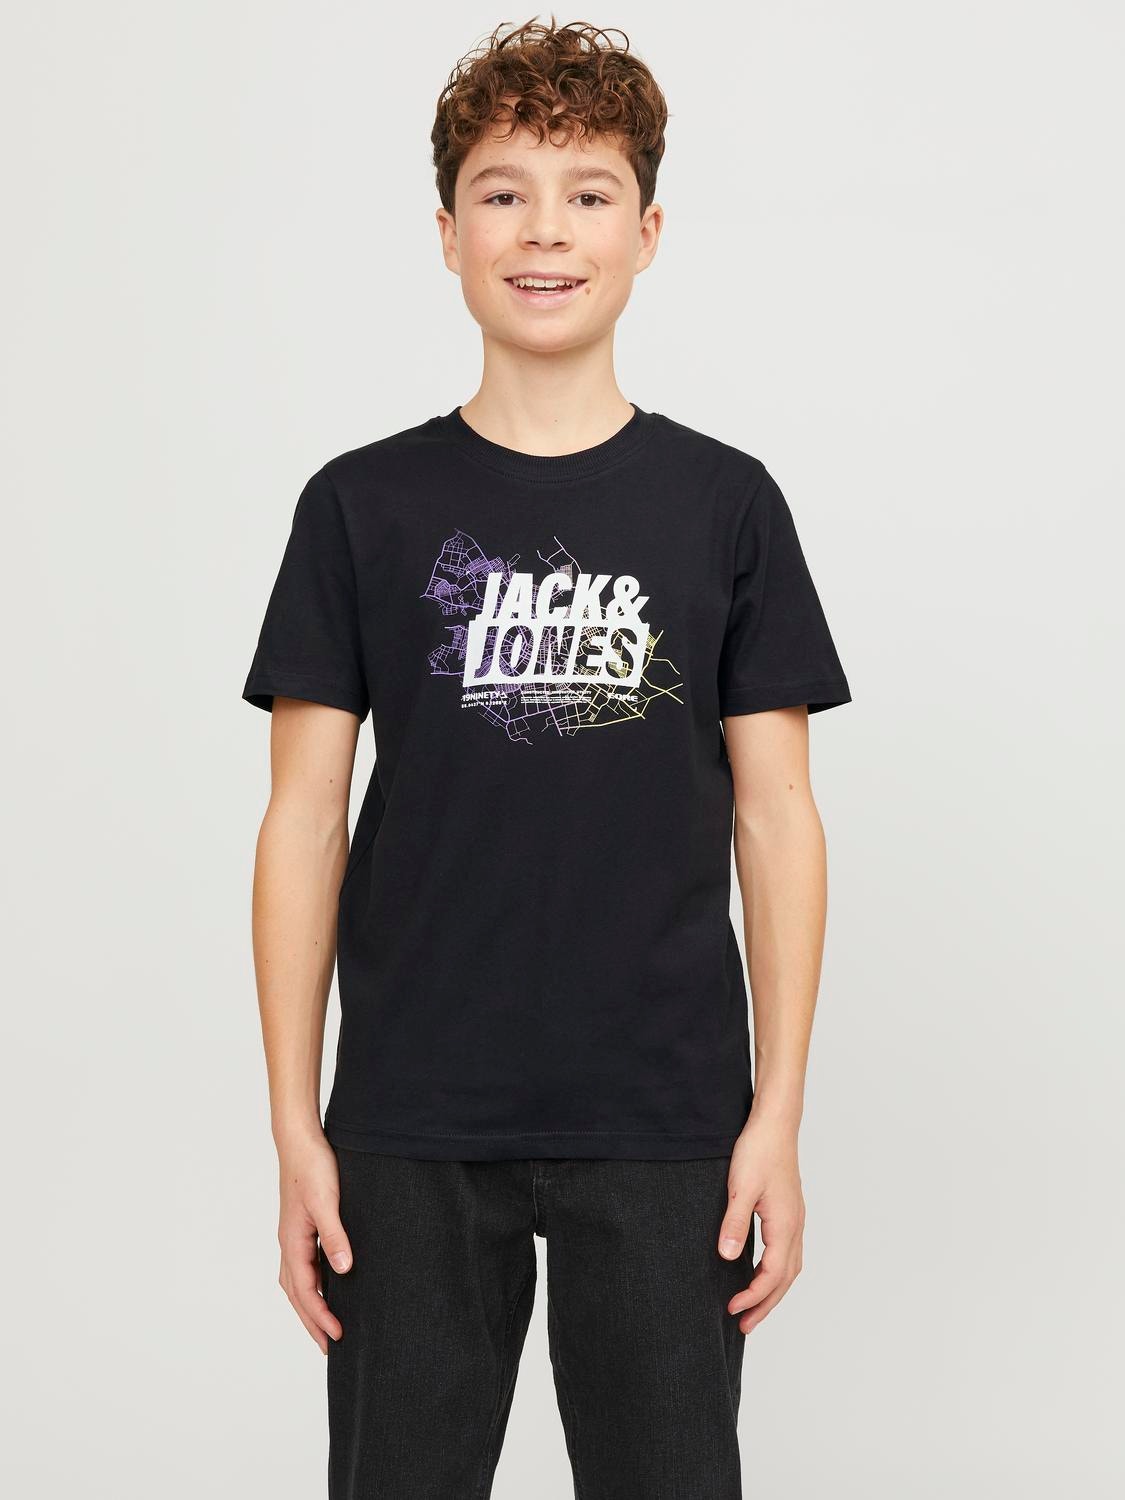 Jack & Jones - Corp T-shirt